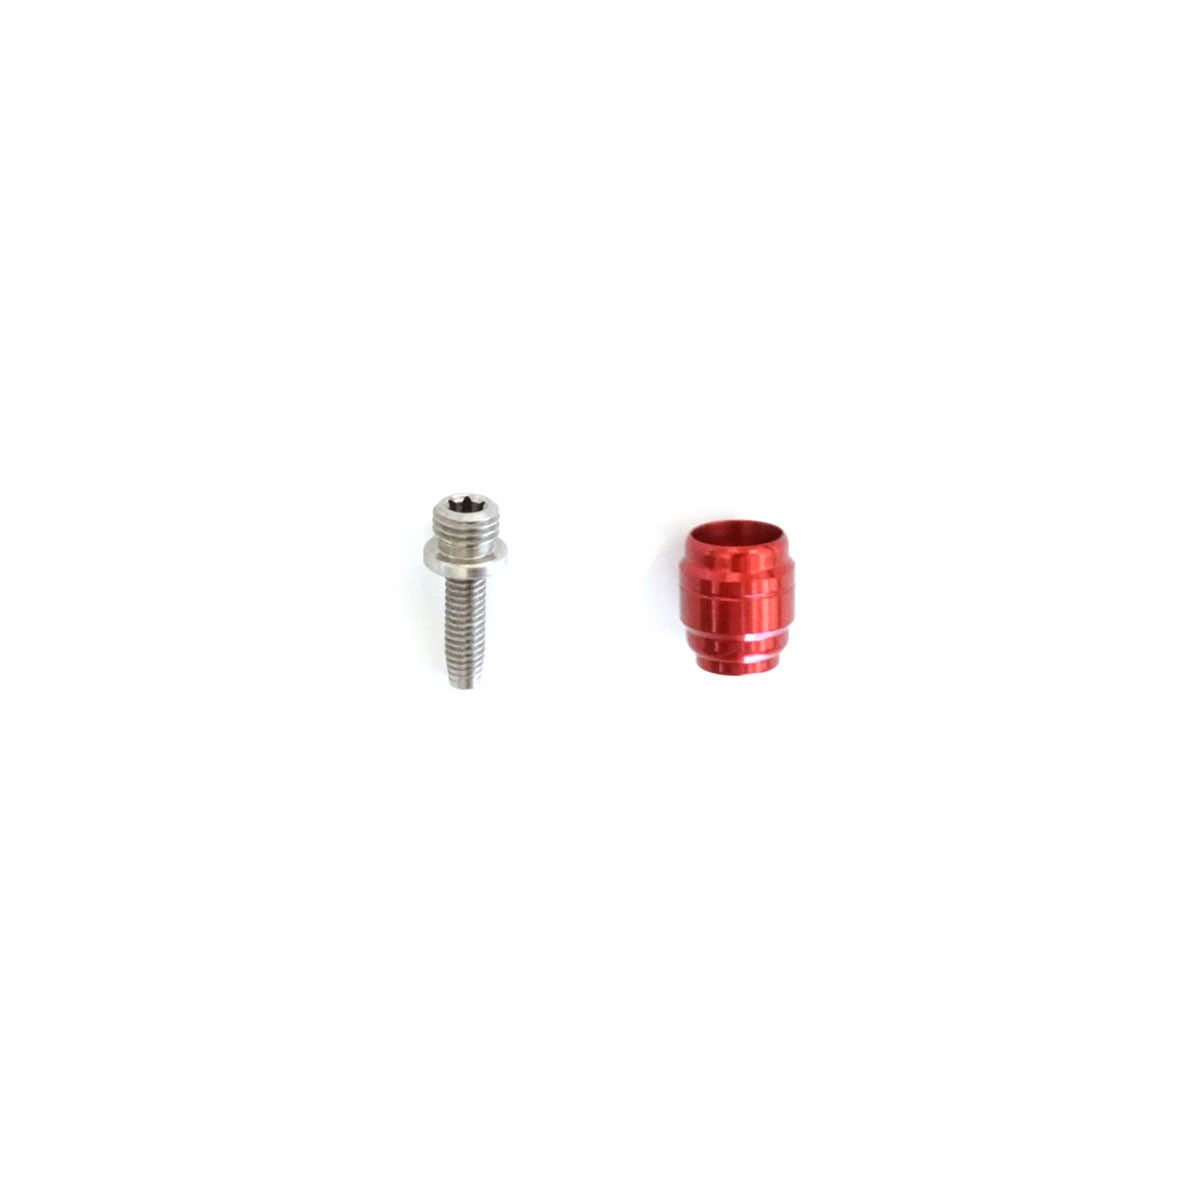 KIT Pin+Ovalillo para frenos Sram Guide/level/elixir 1 unidad